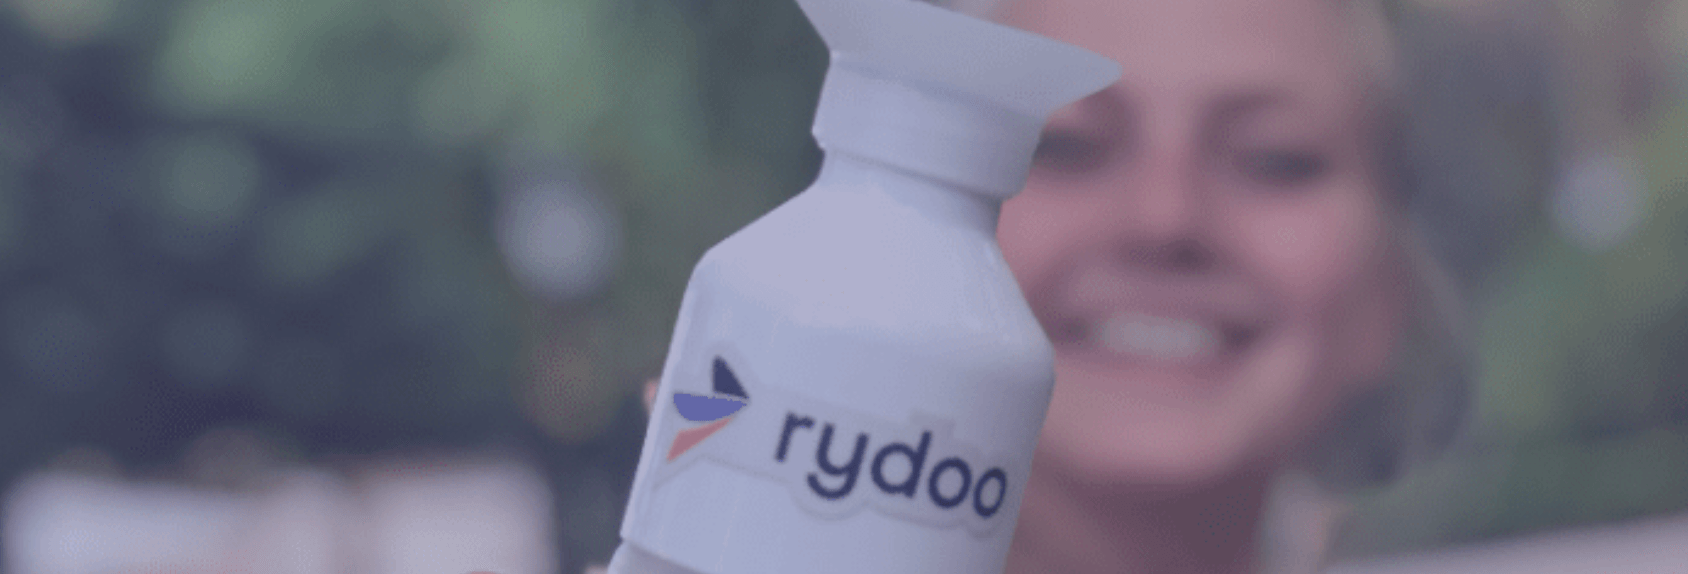 Rydoo Sales Development Representative